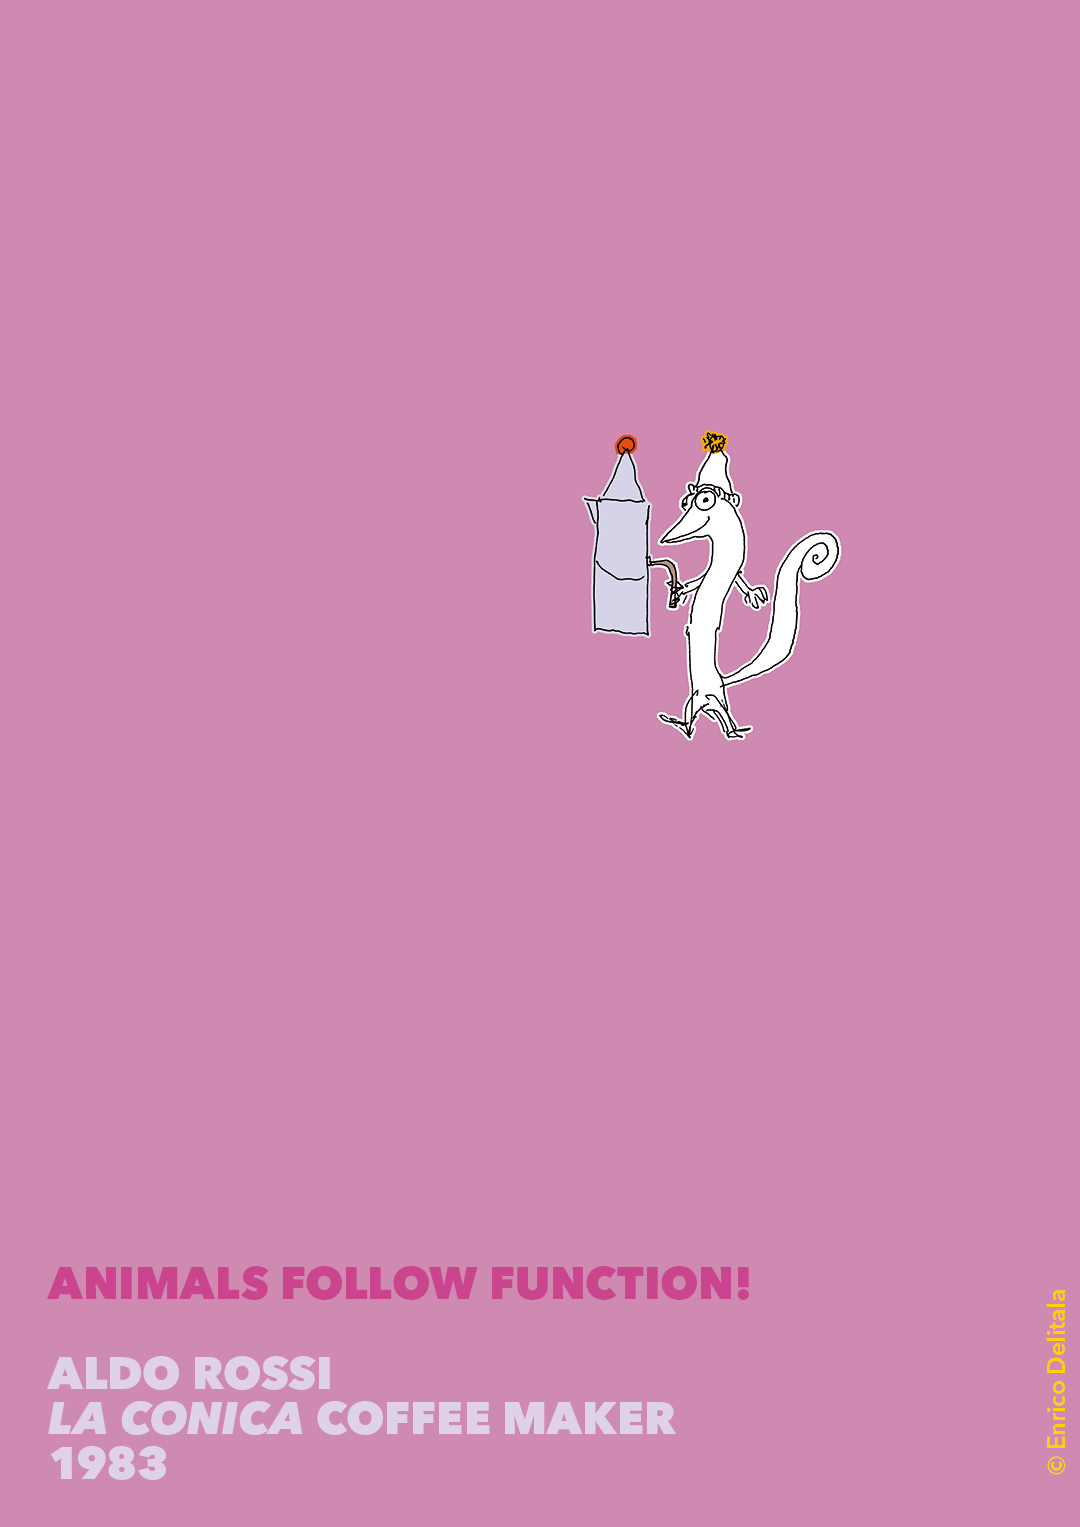 Camaleonte: Enrico Delitala illustrator animals follow function form follows function Aldo Rossi